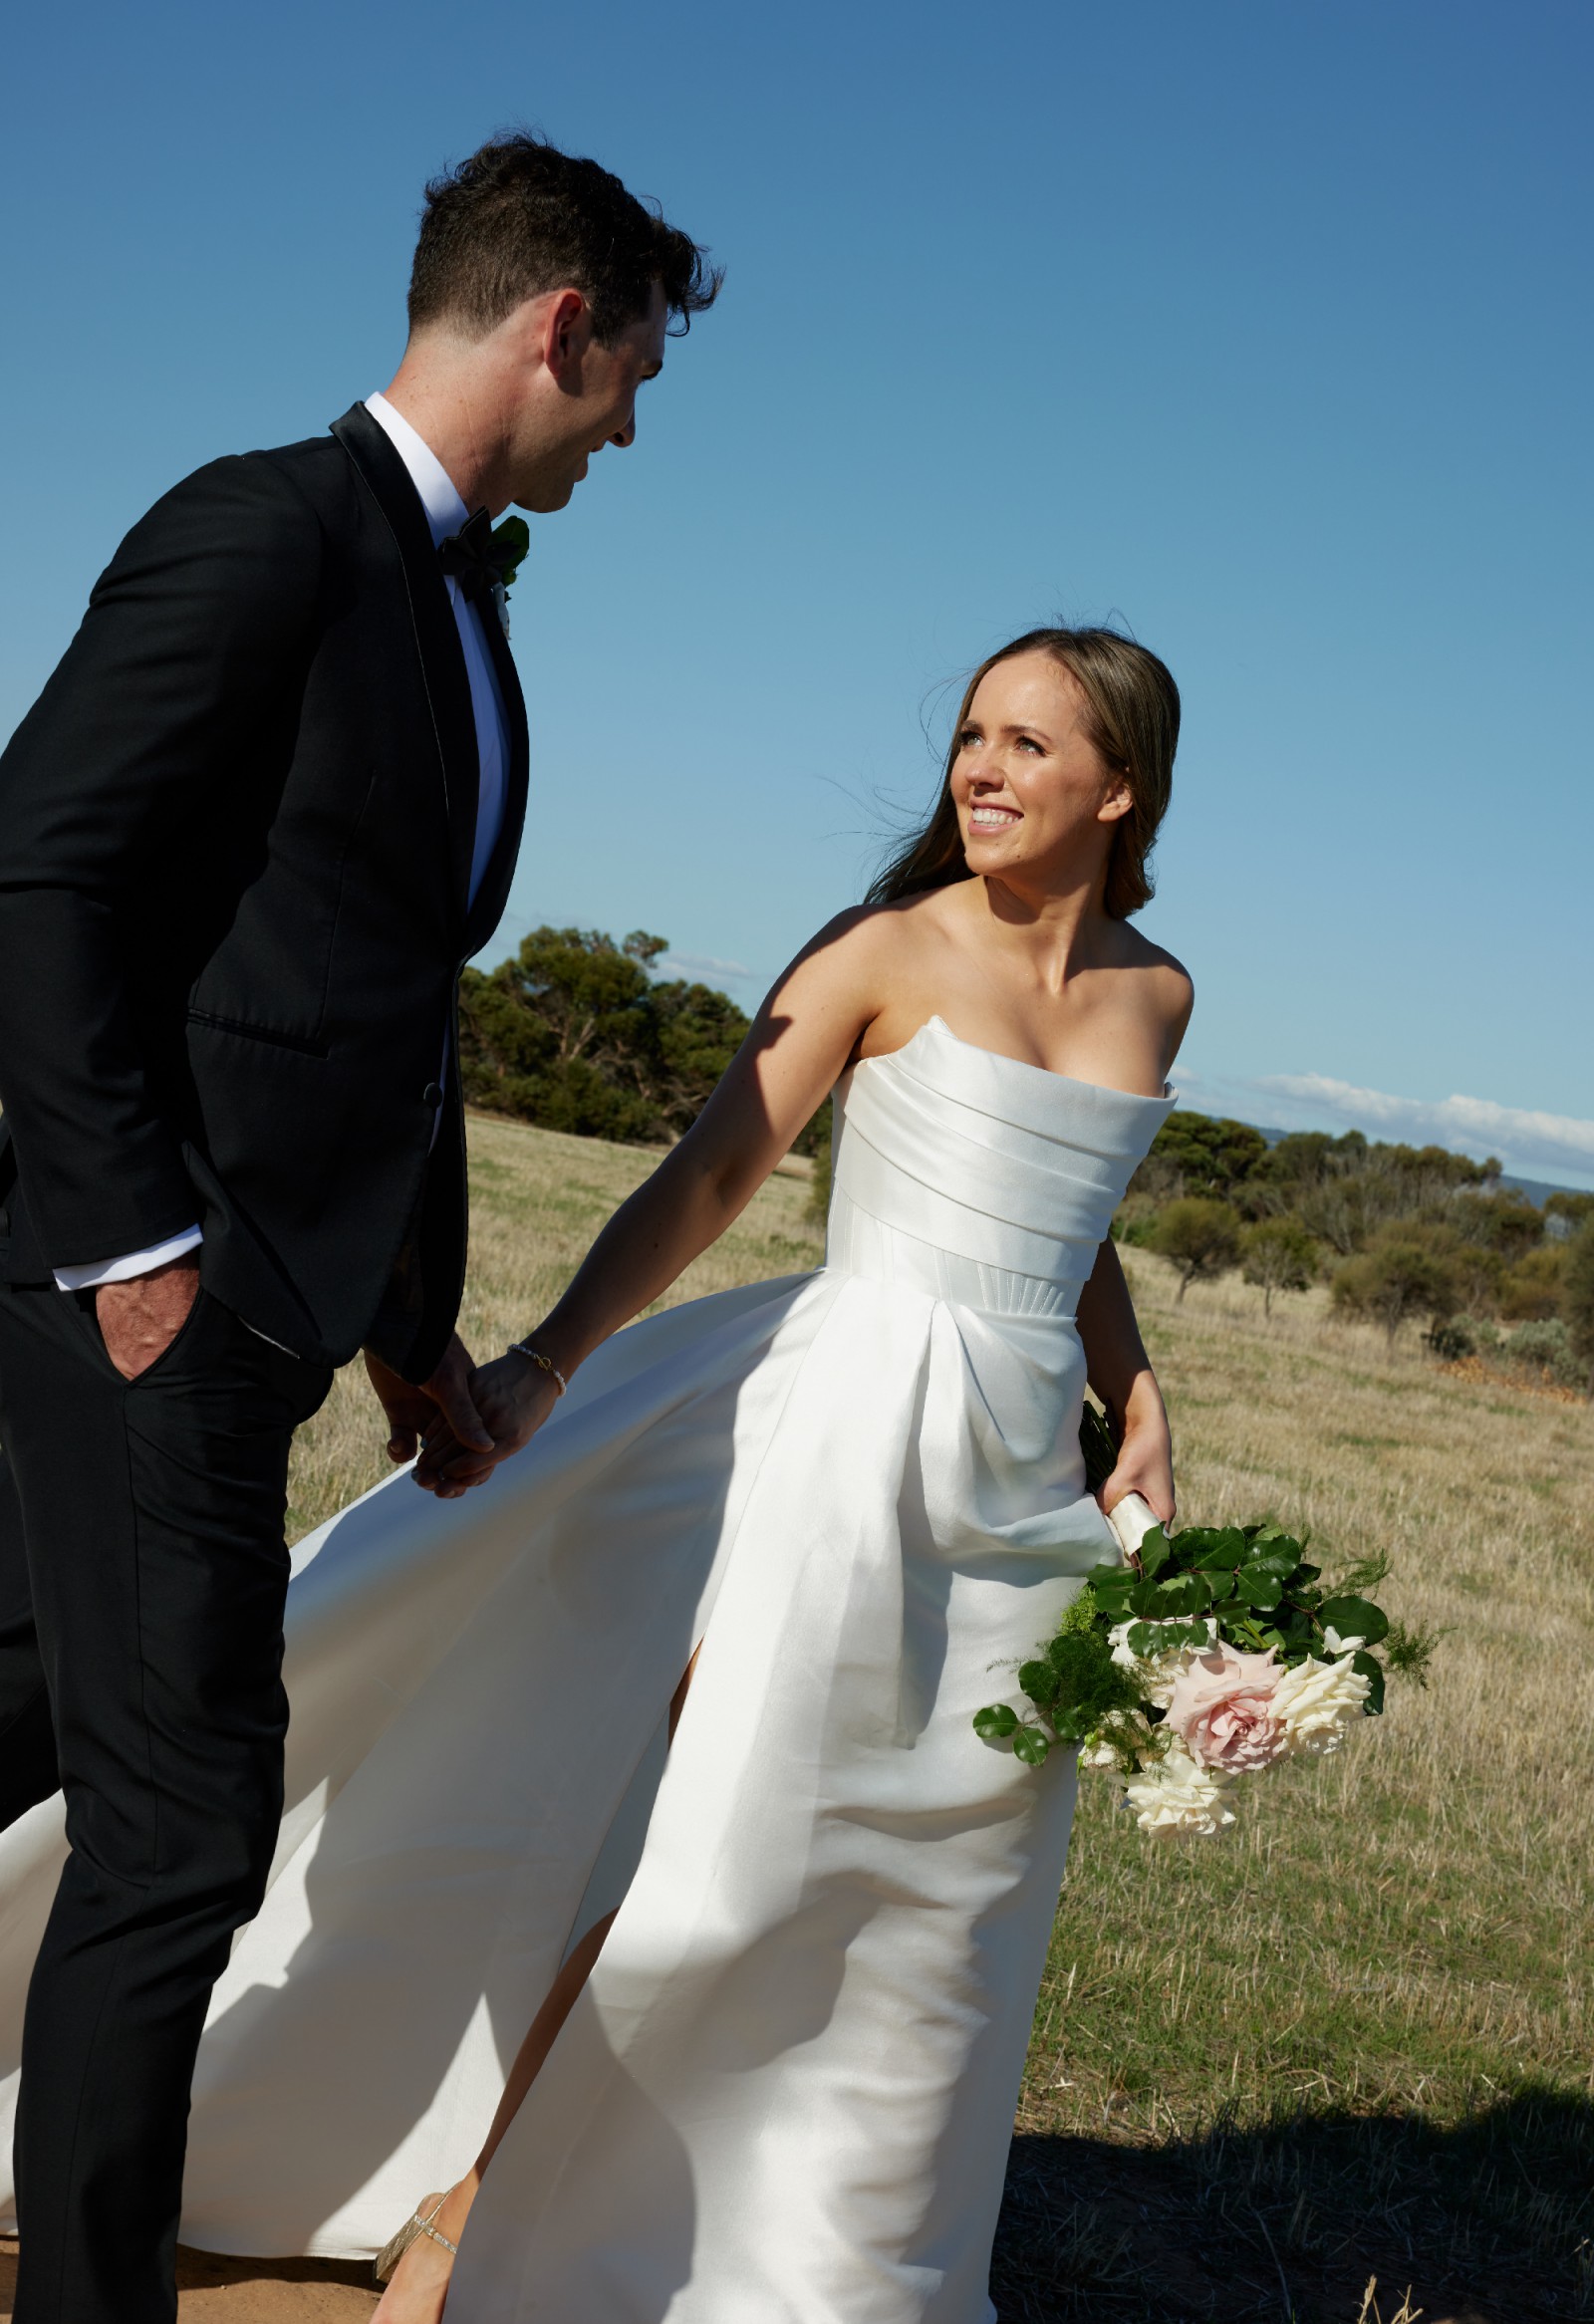 Alex Perry Audrey Wedding Dress Save 37% - Stillwhite